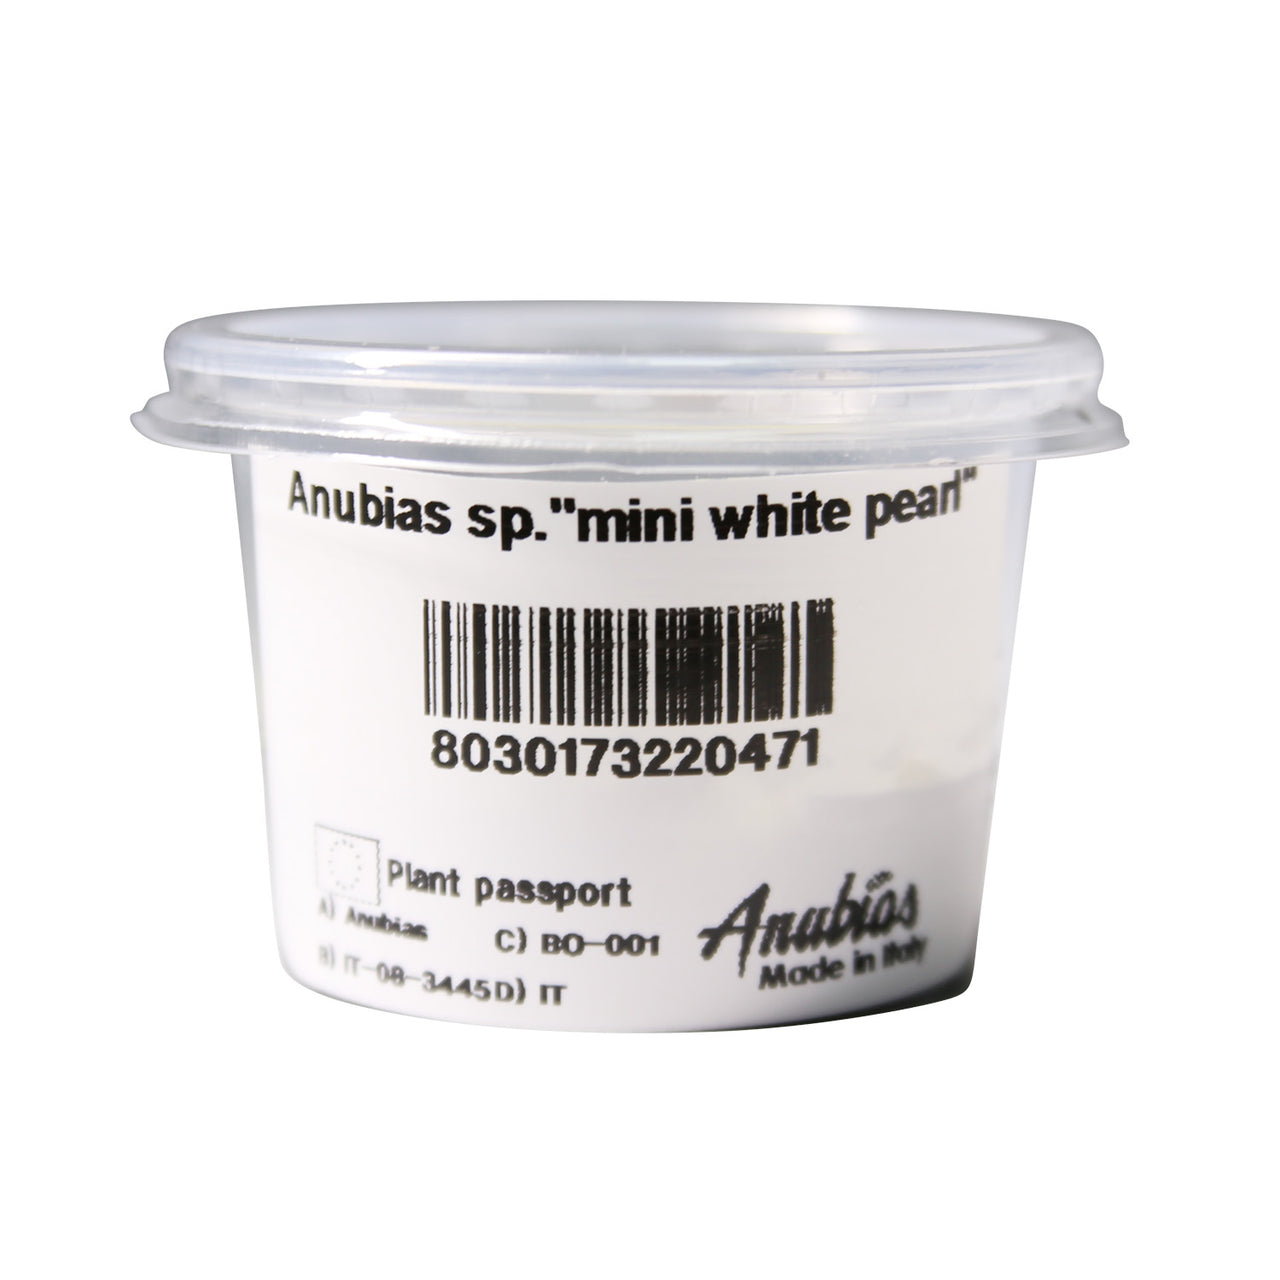 Anubias sp. 'mini white pearl' Tissue Culture Cup